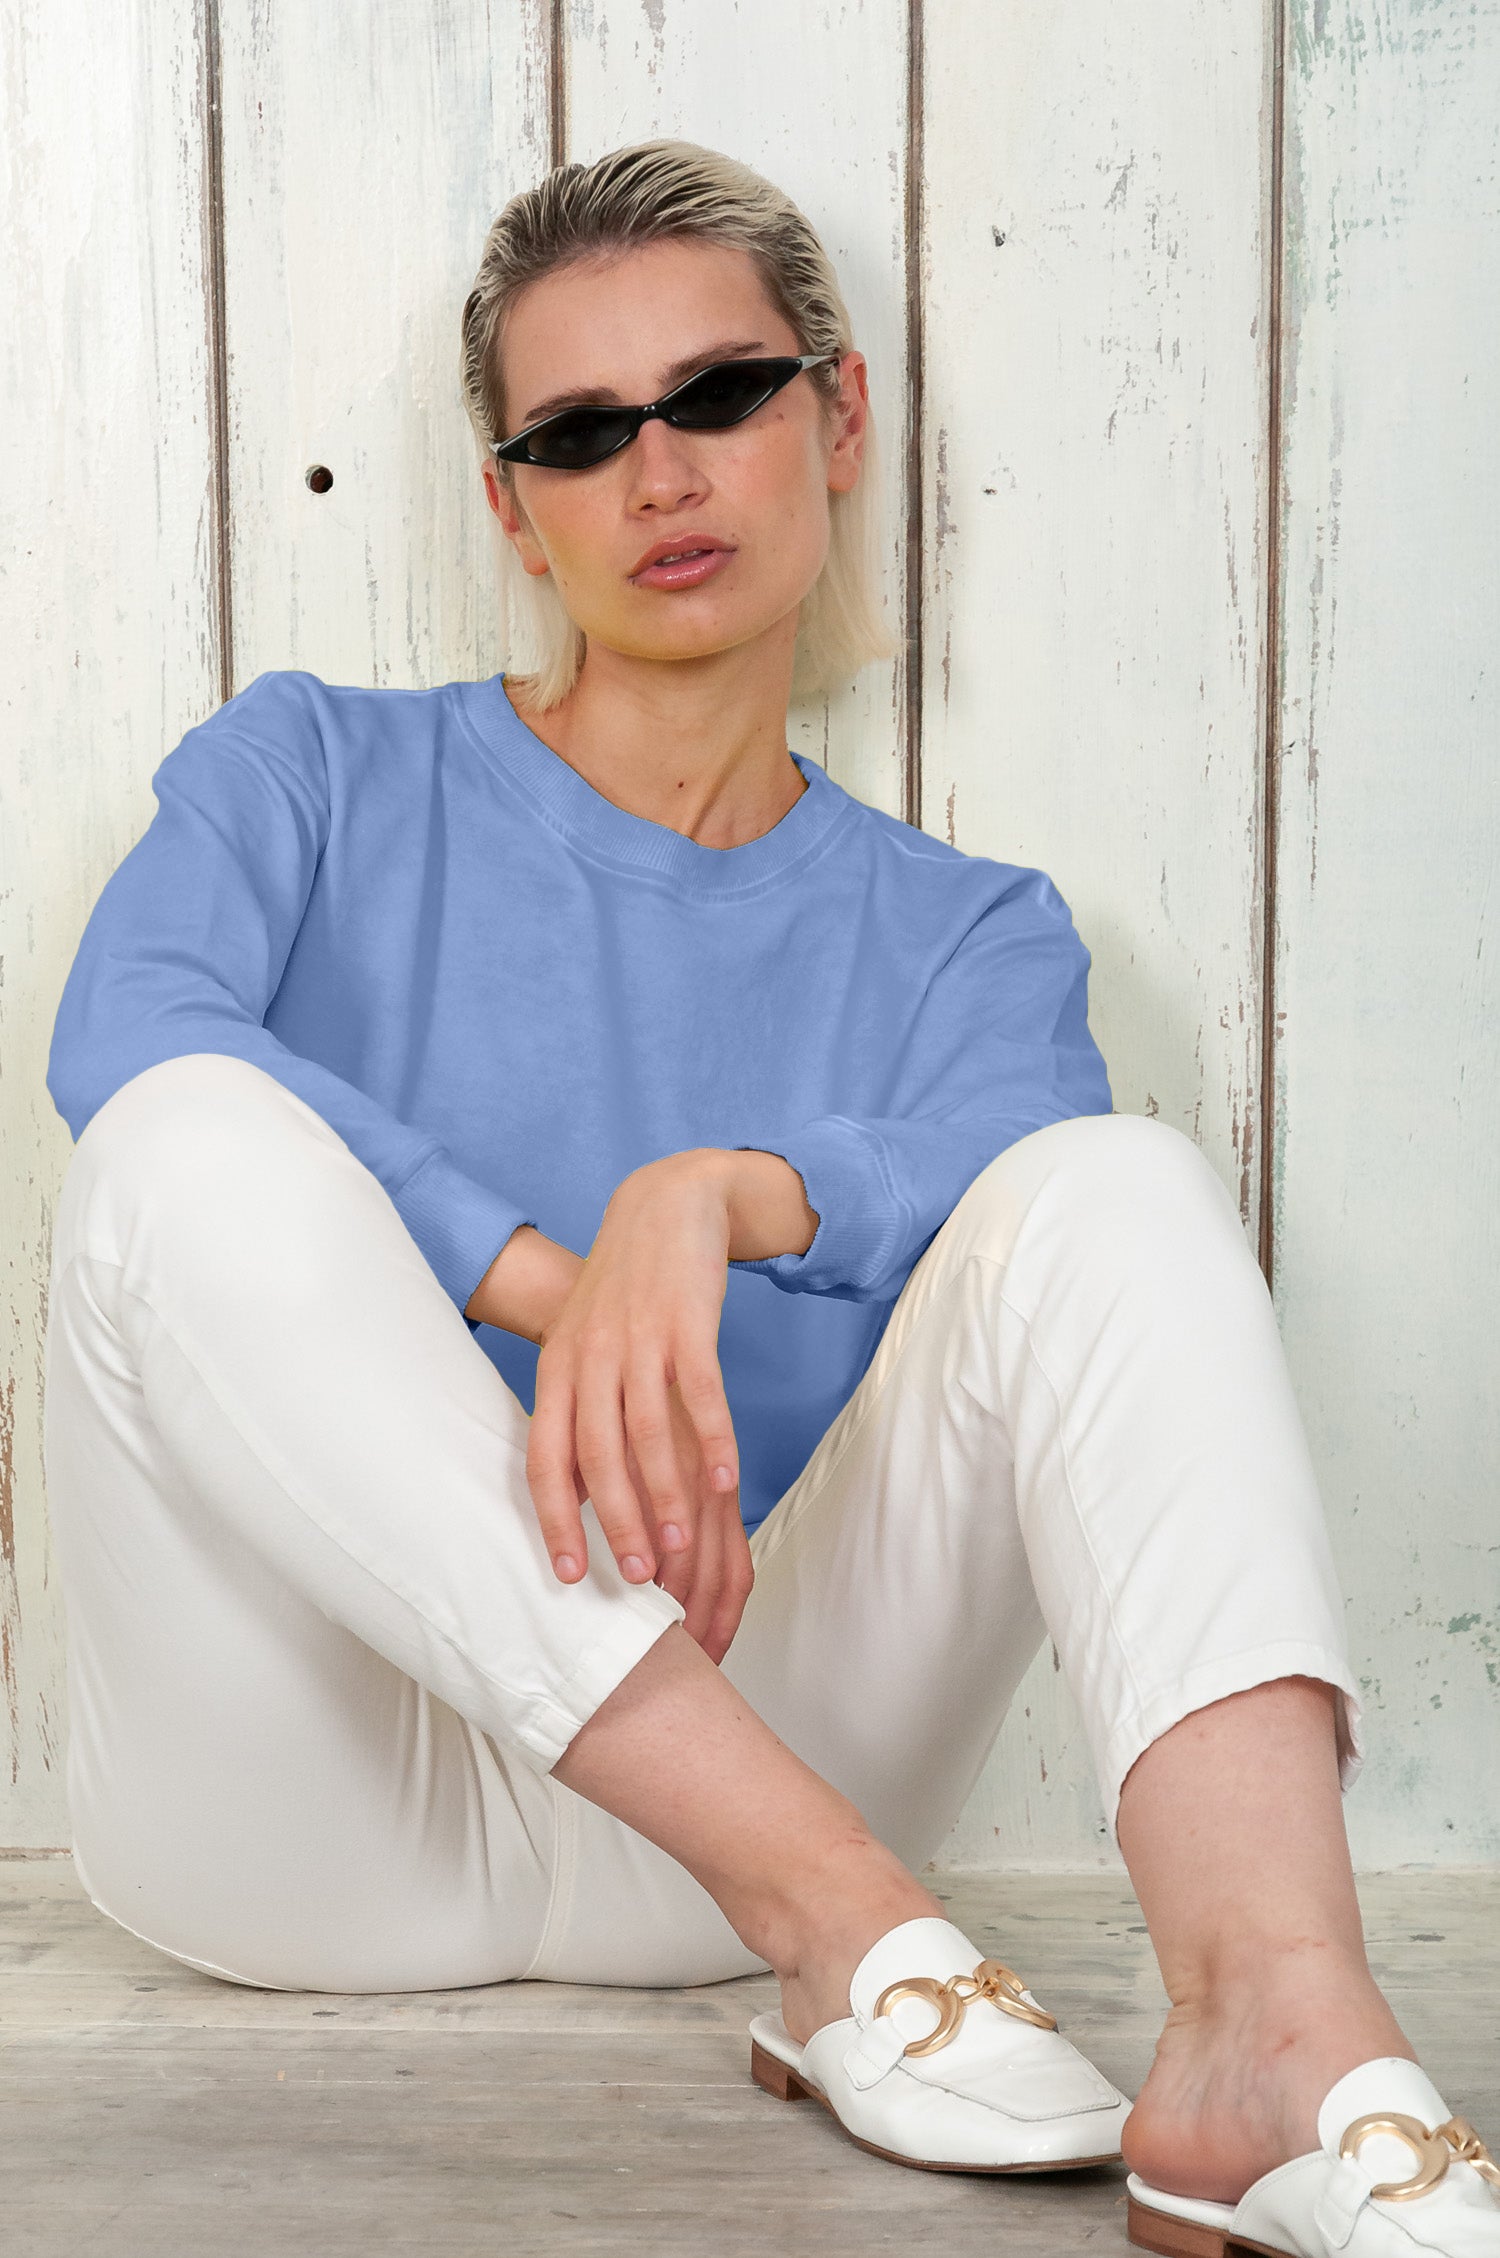 Roxie Sweatshirt - Women's Cropped Cotton Sweatshirt - Bay